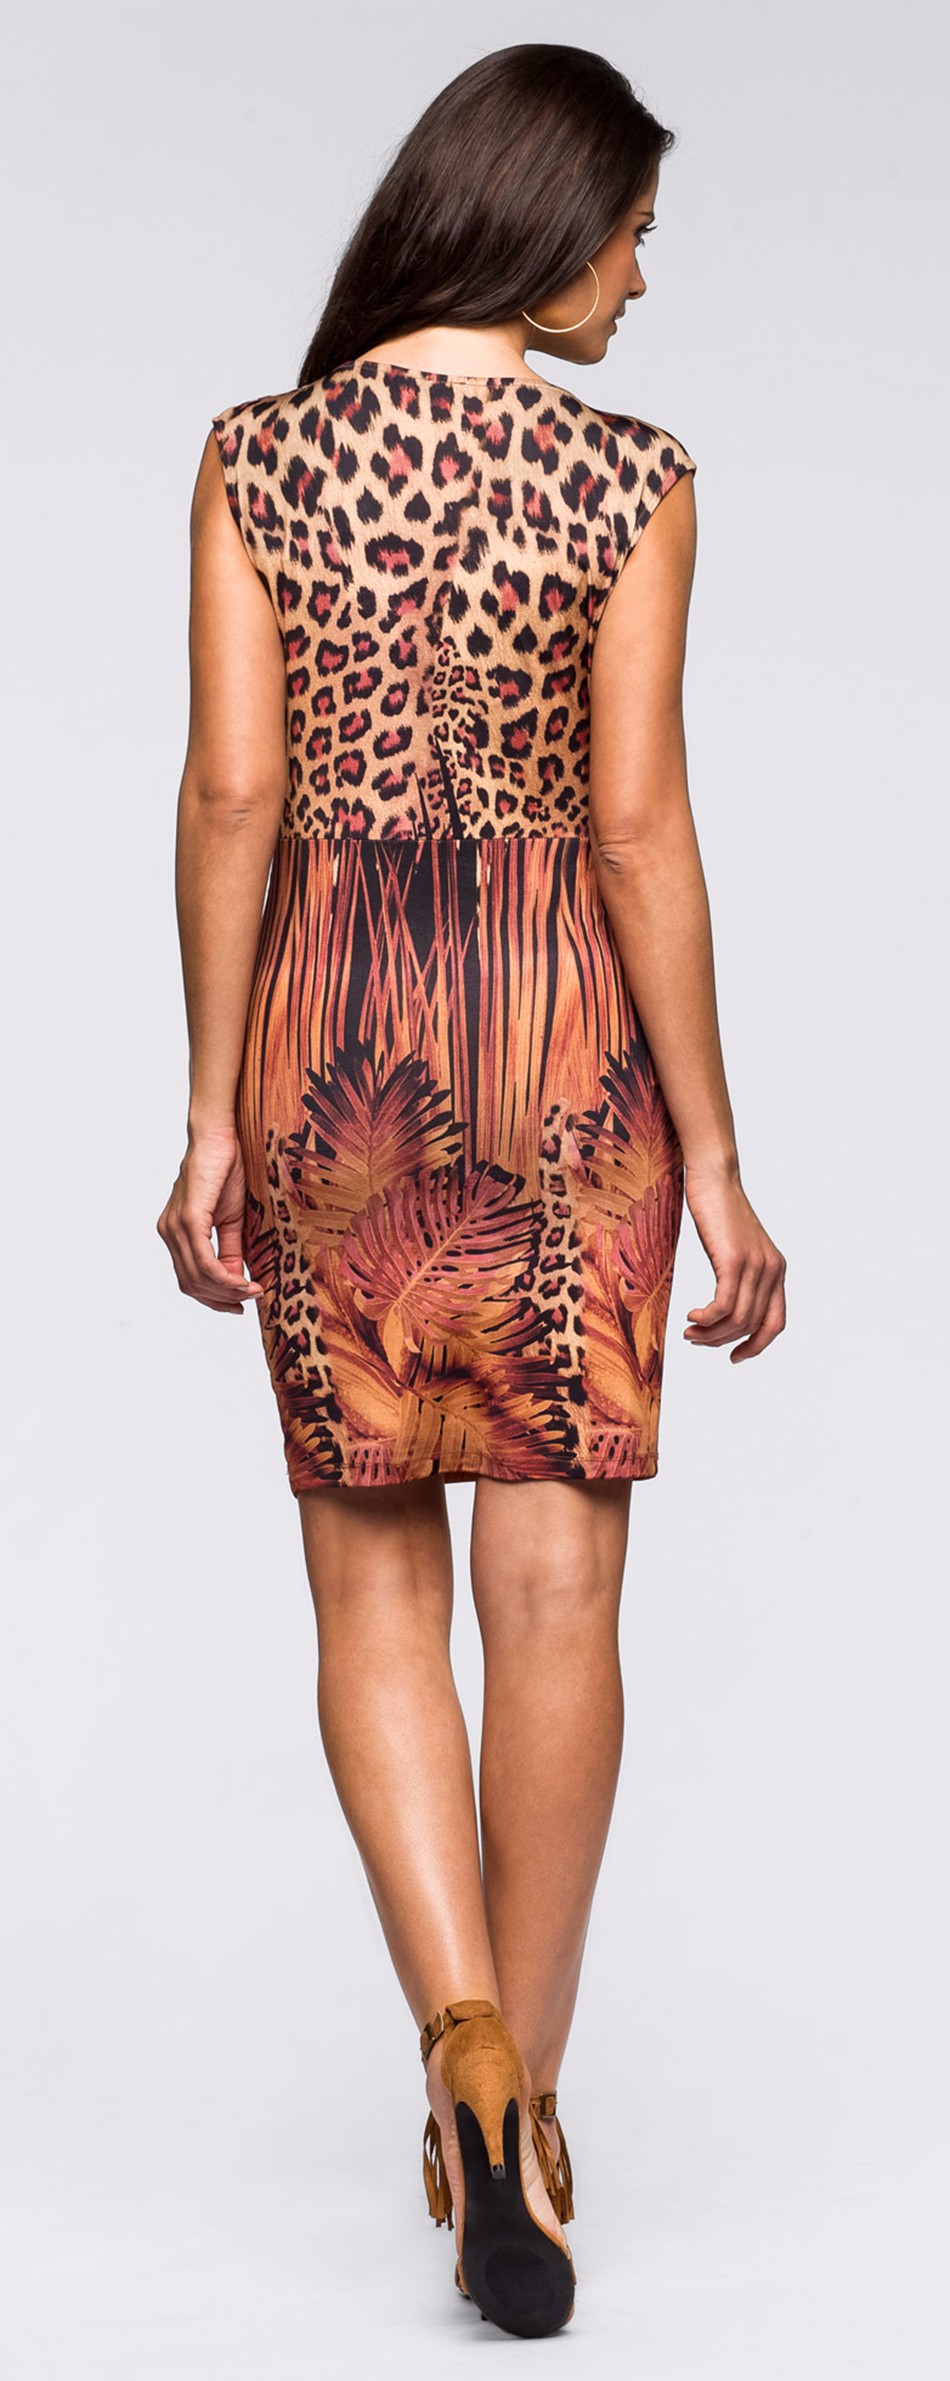 Kink-Summer-Dress-Women-European-Leopard-Print-Bodycon-Dress-Women-2017-New-Elegant-Casual-Sheath-Pe-32705333185